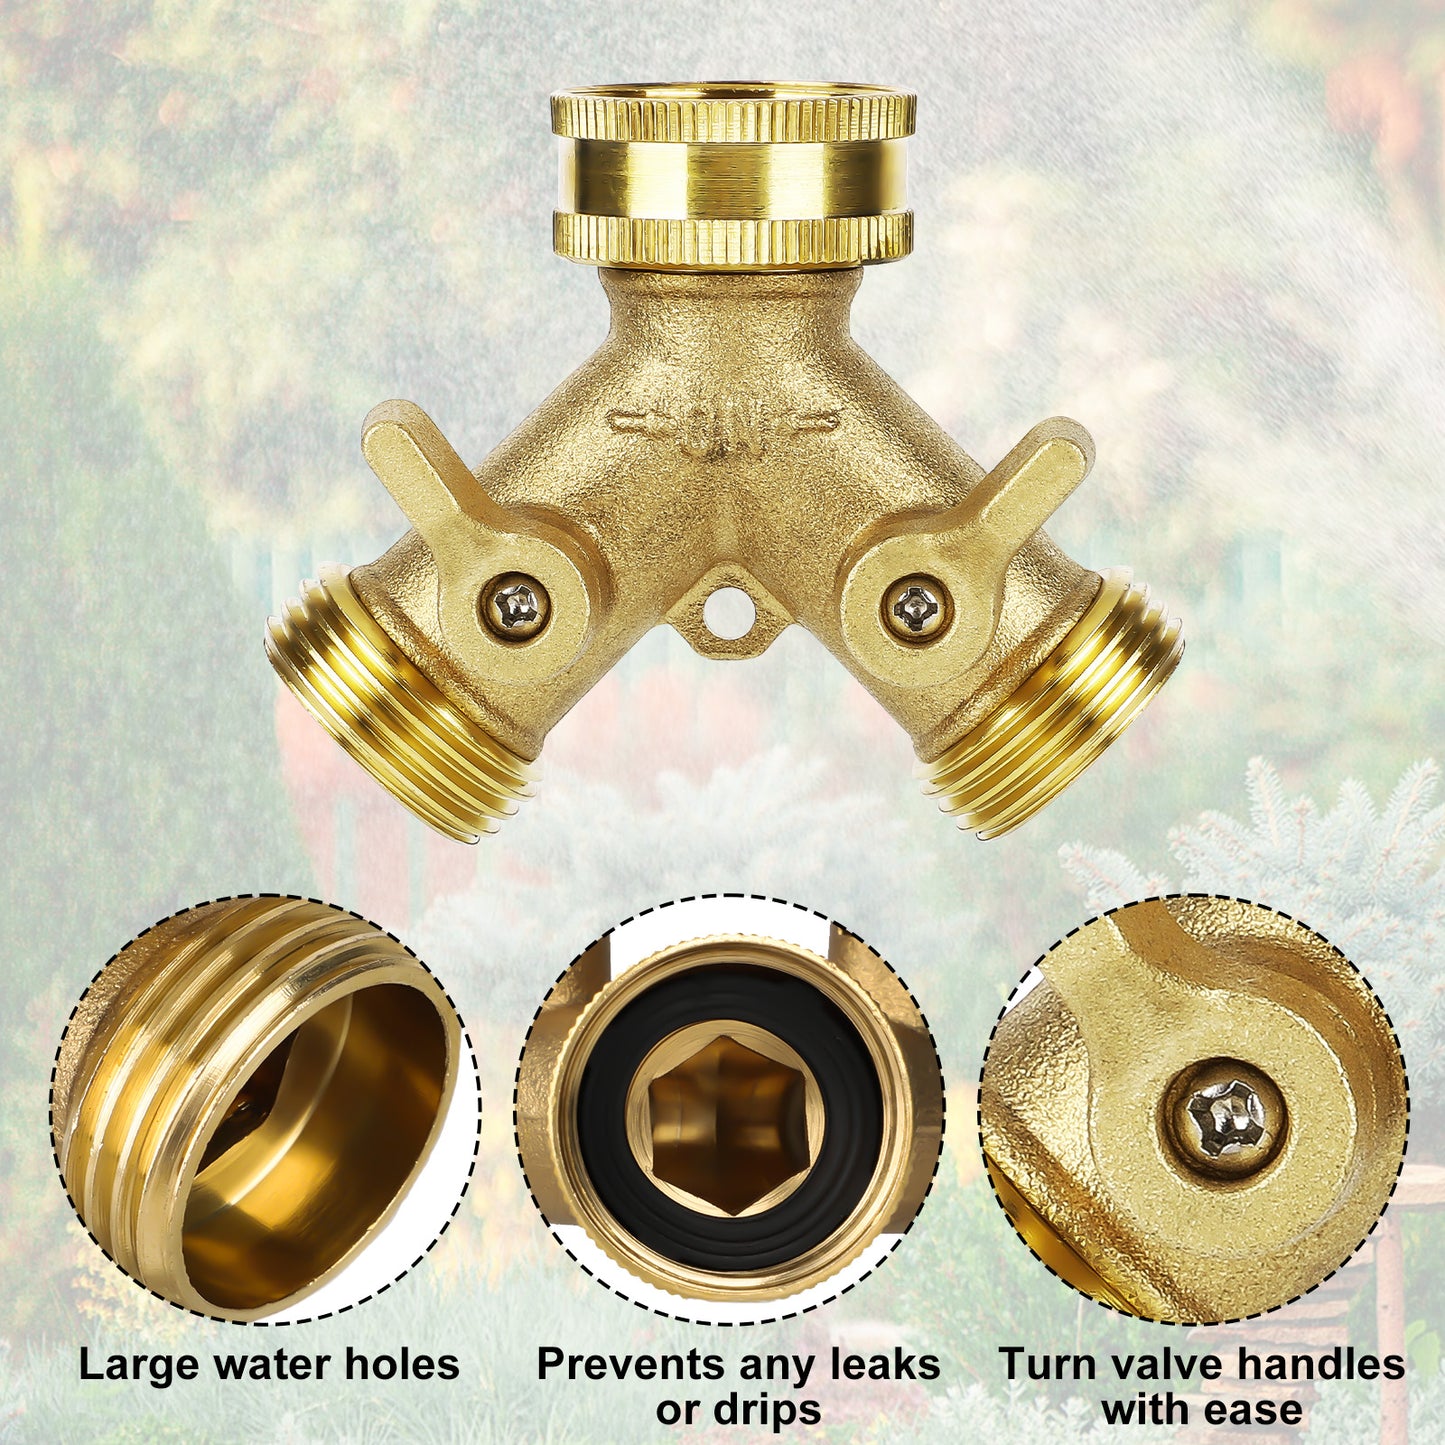 Water Valves - Brass Hose Splitter with Adjustable Flow Control